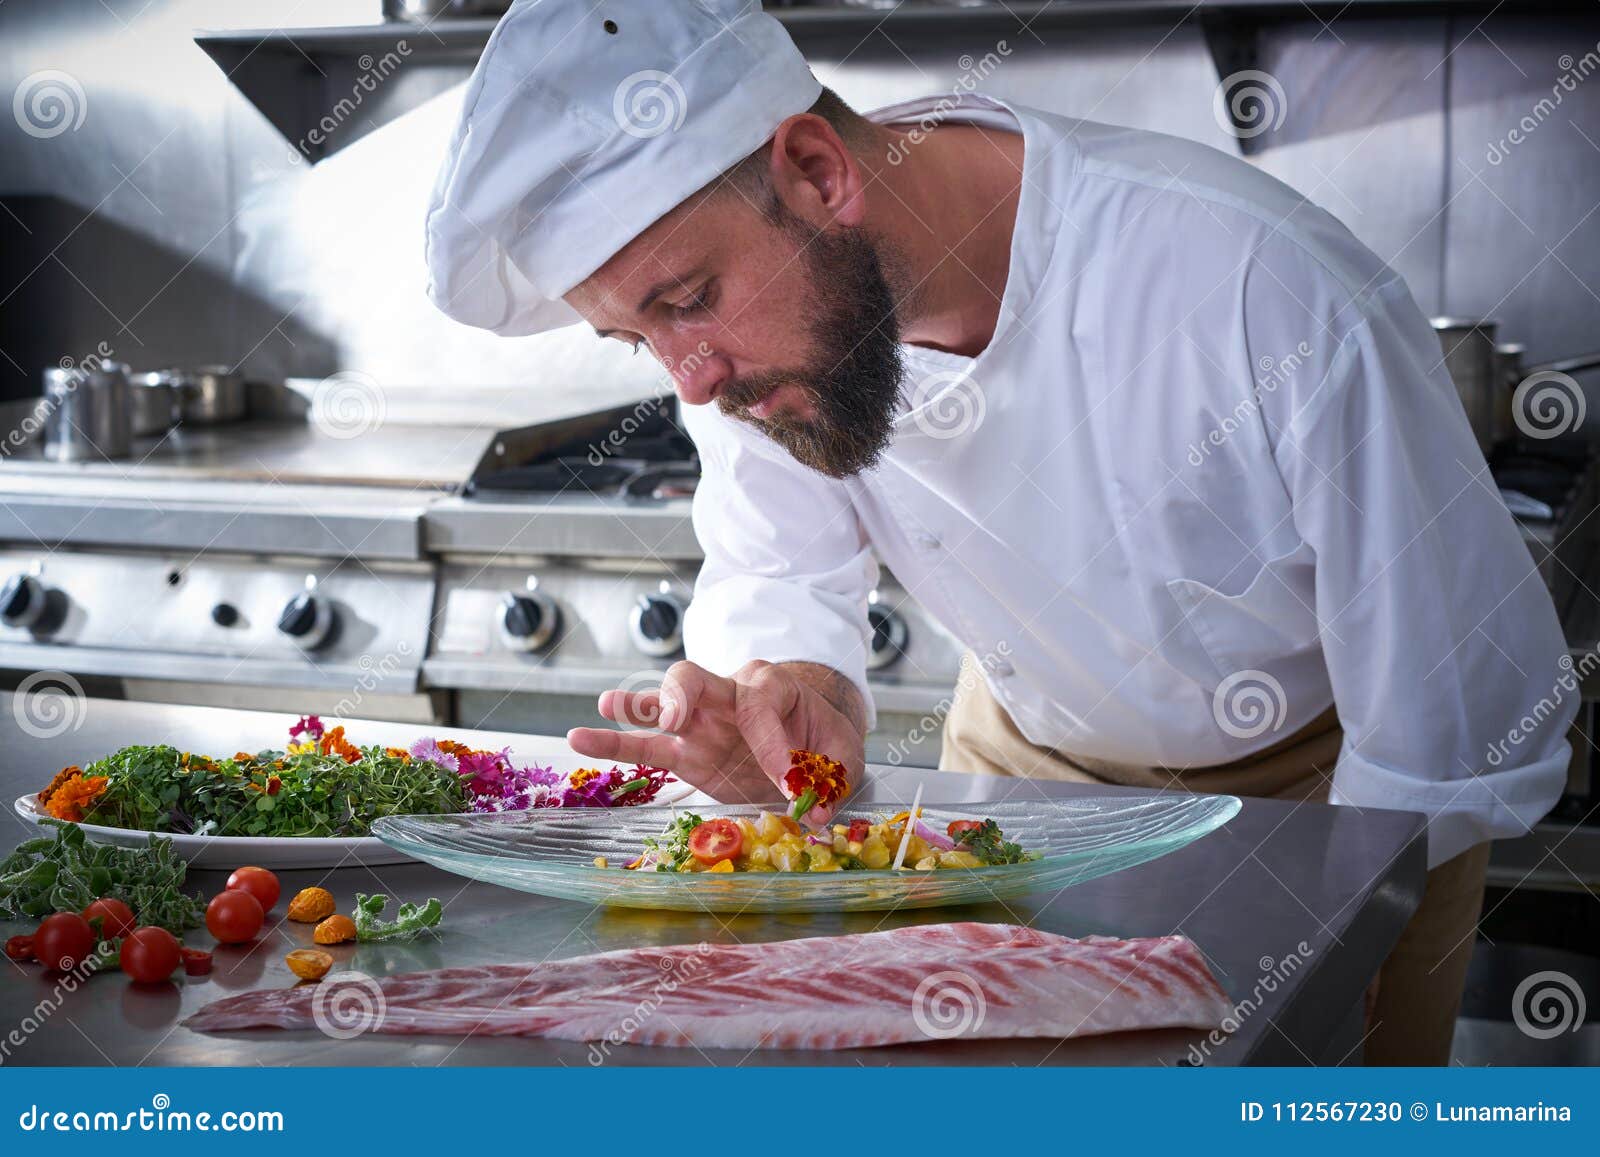 chef garnishing flower in ceviche dish